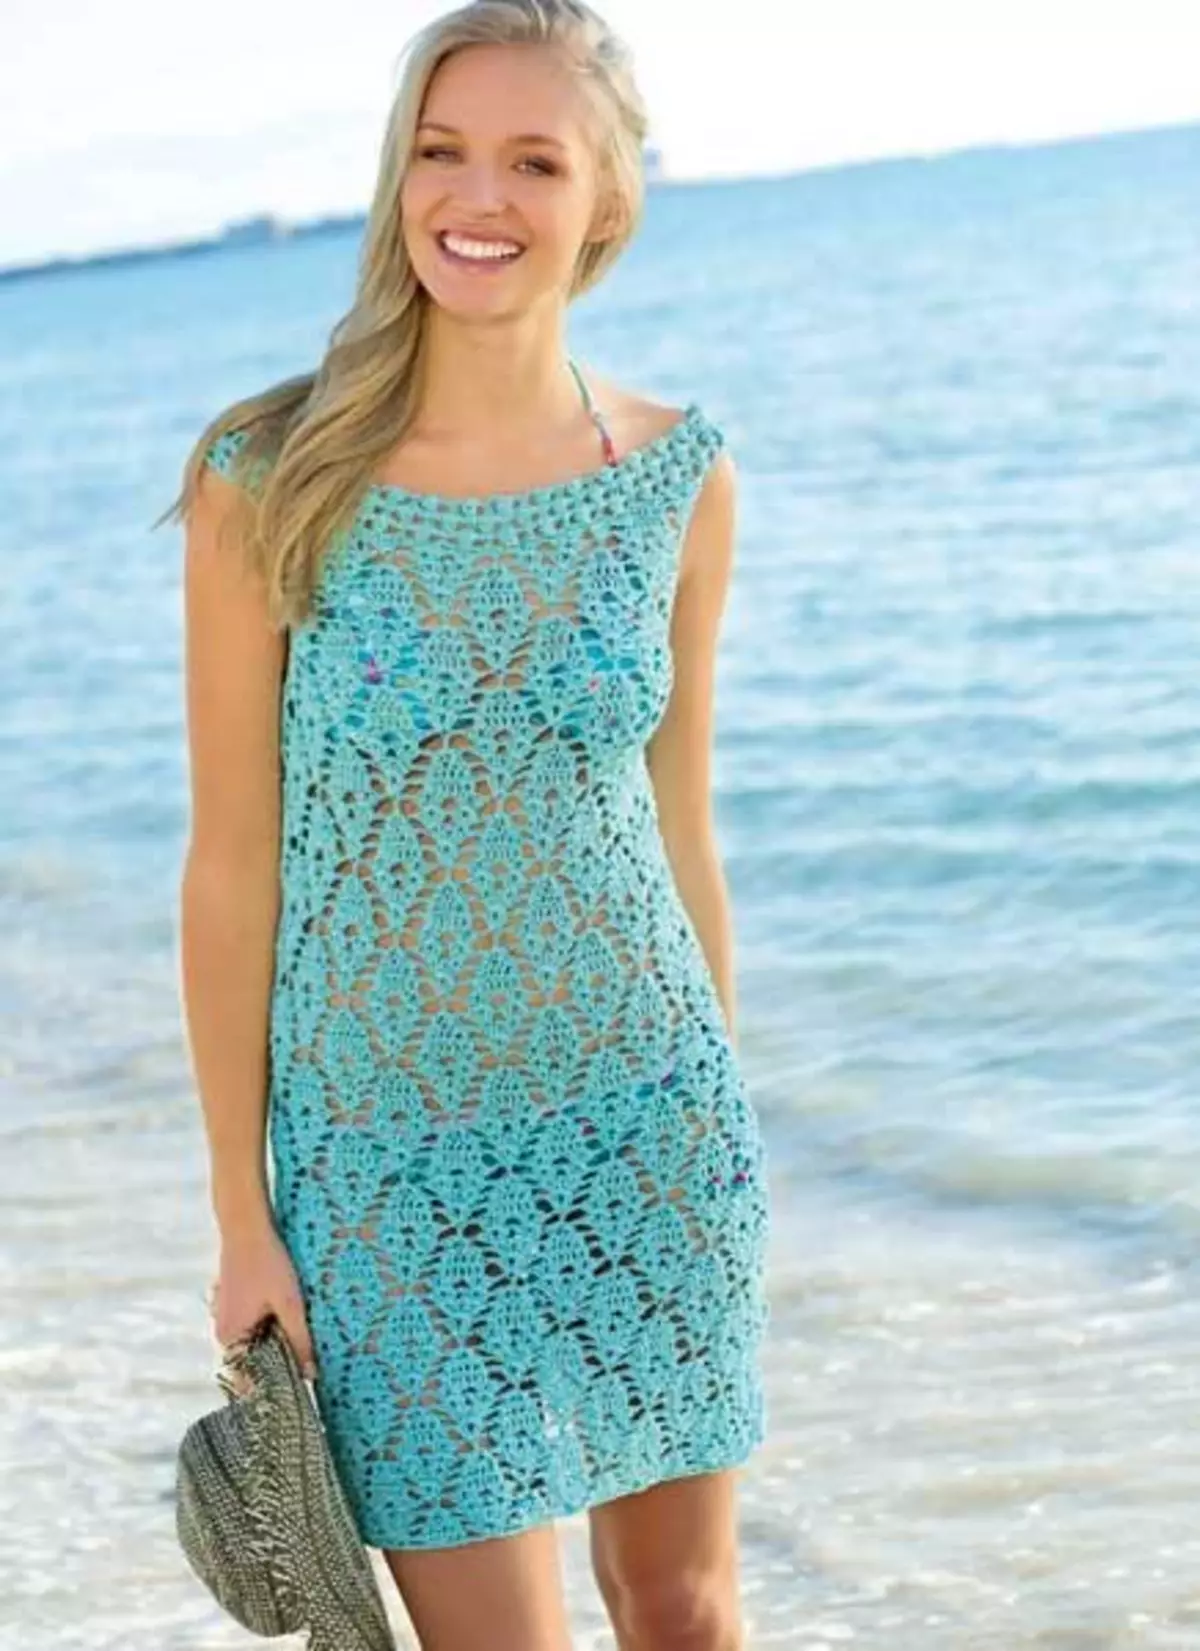 Beach Dress Crochet για αρχάριους: Σχέδια με φωτογραφίες και βίντεο